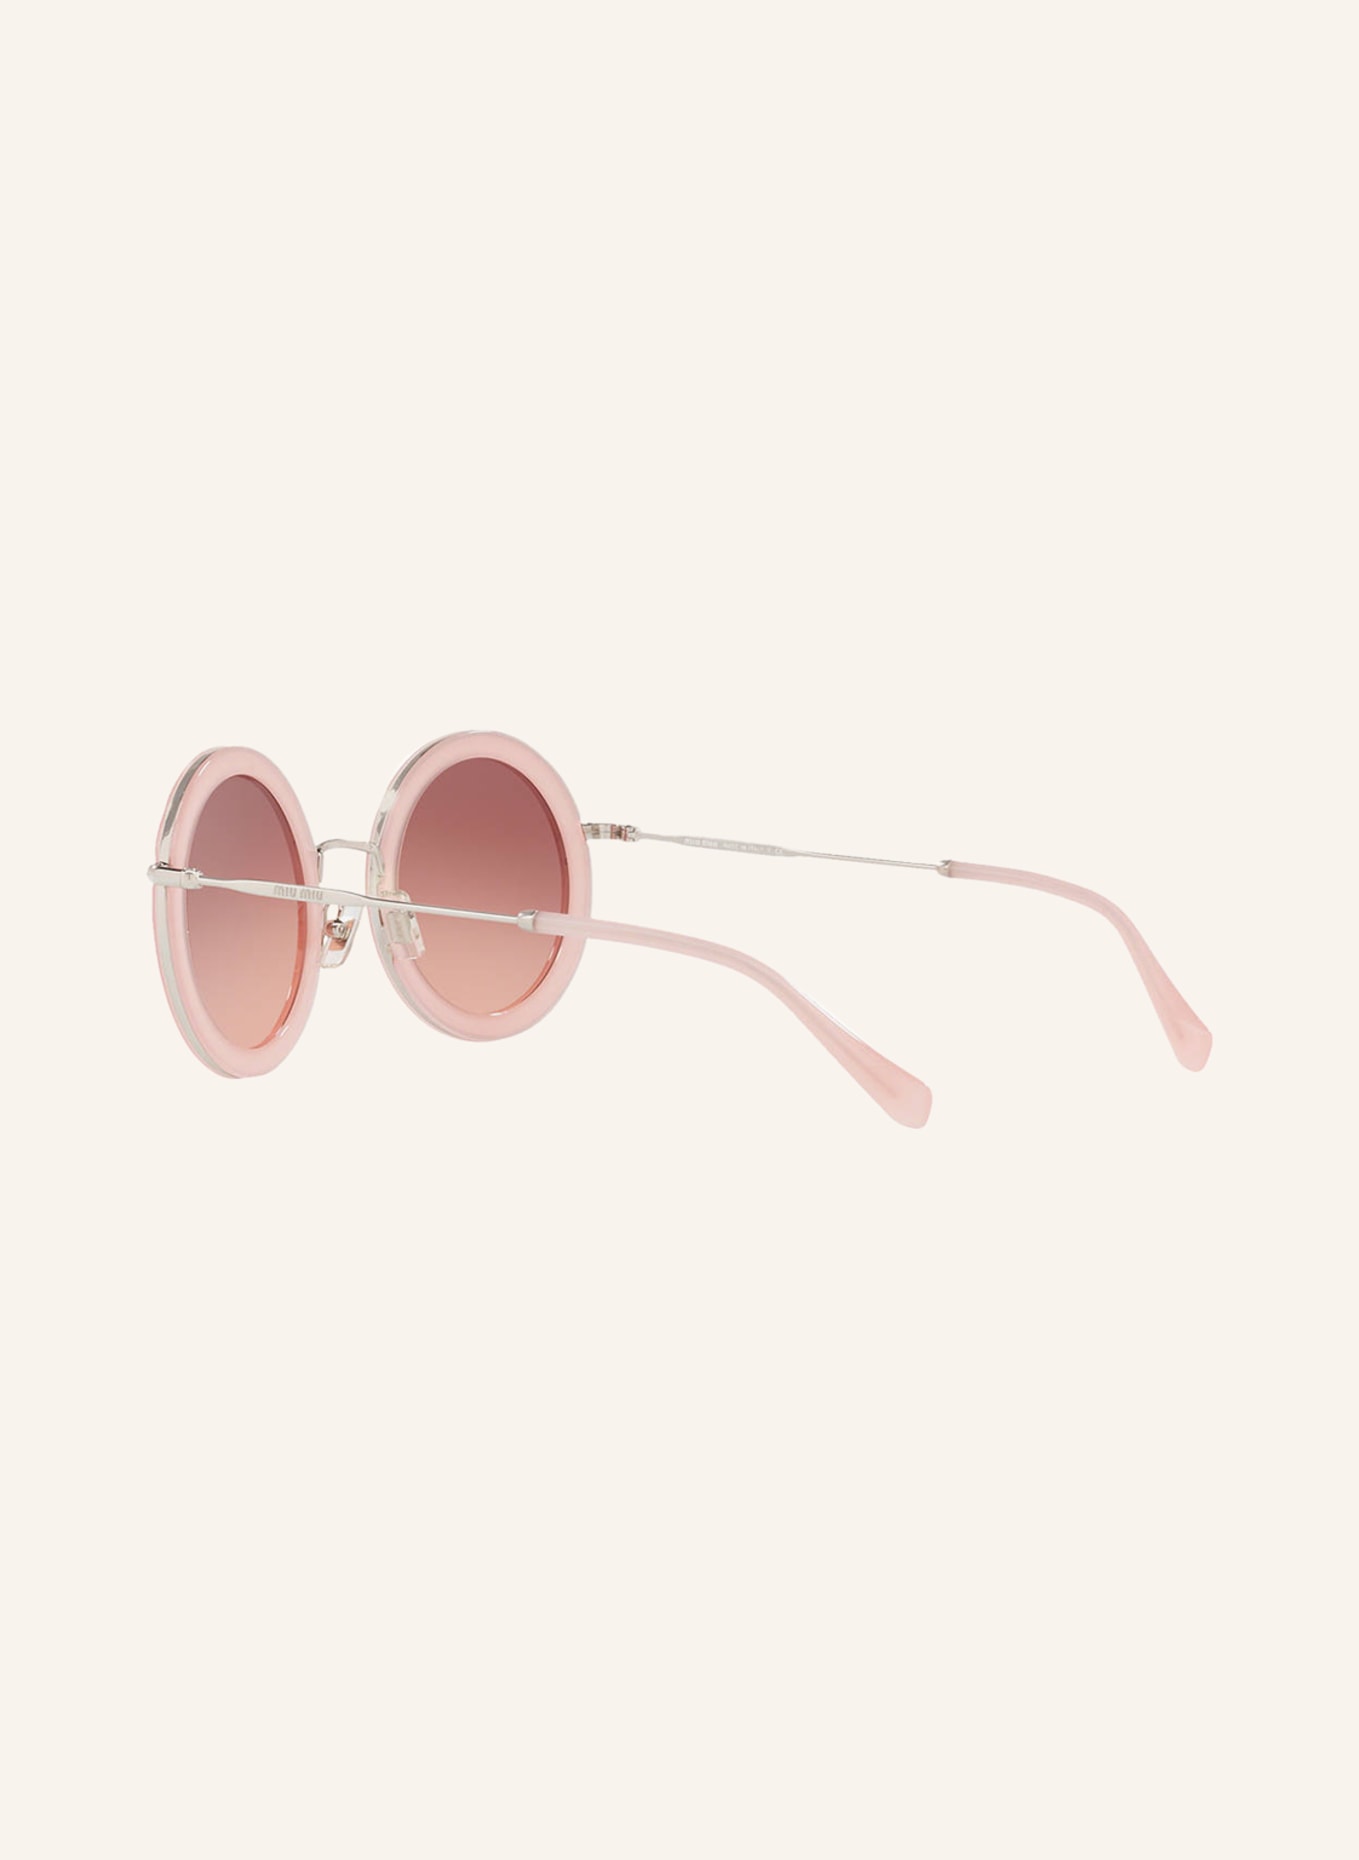 MIU MIU Sunglasses MU 59US, Color: 135/0A5 - LIGHT PINK/ROSÉ (Image 4)